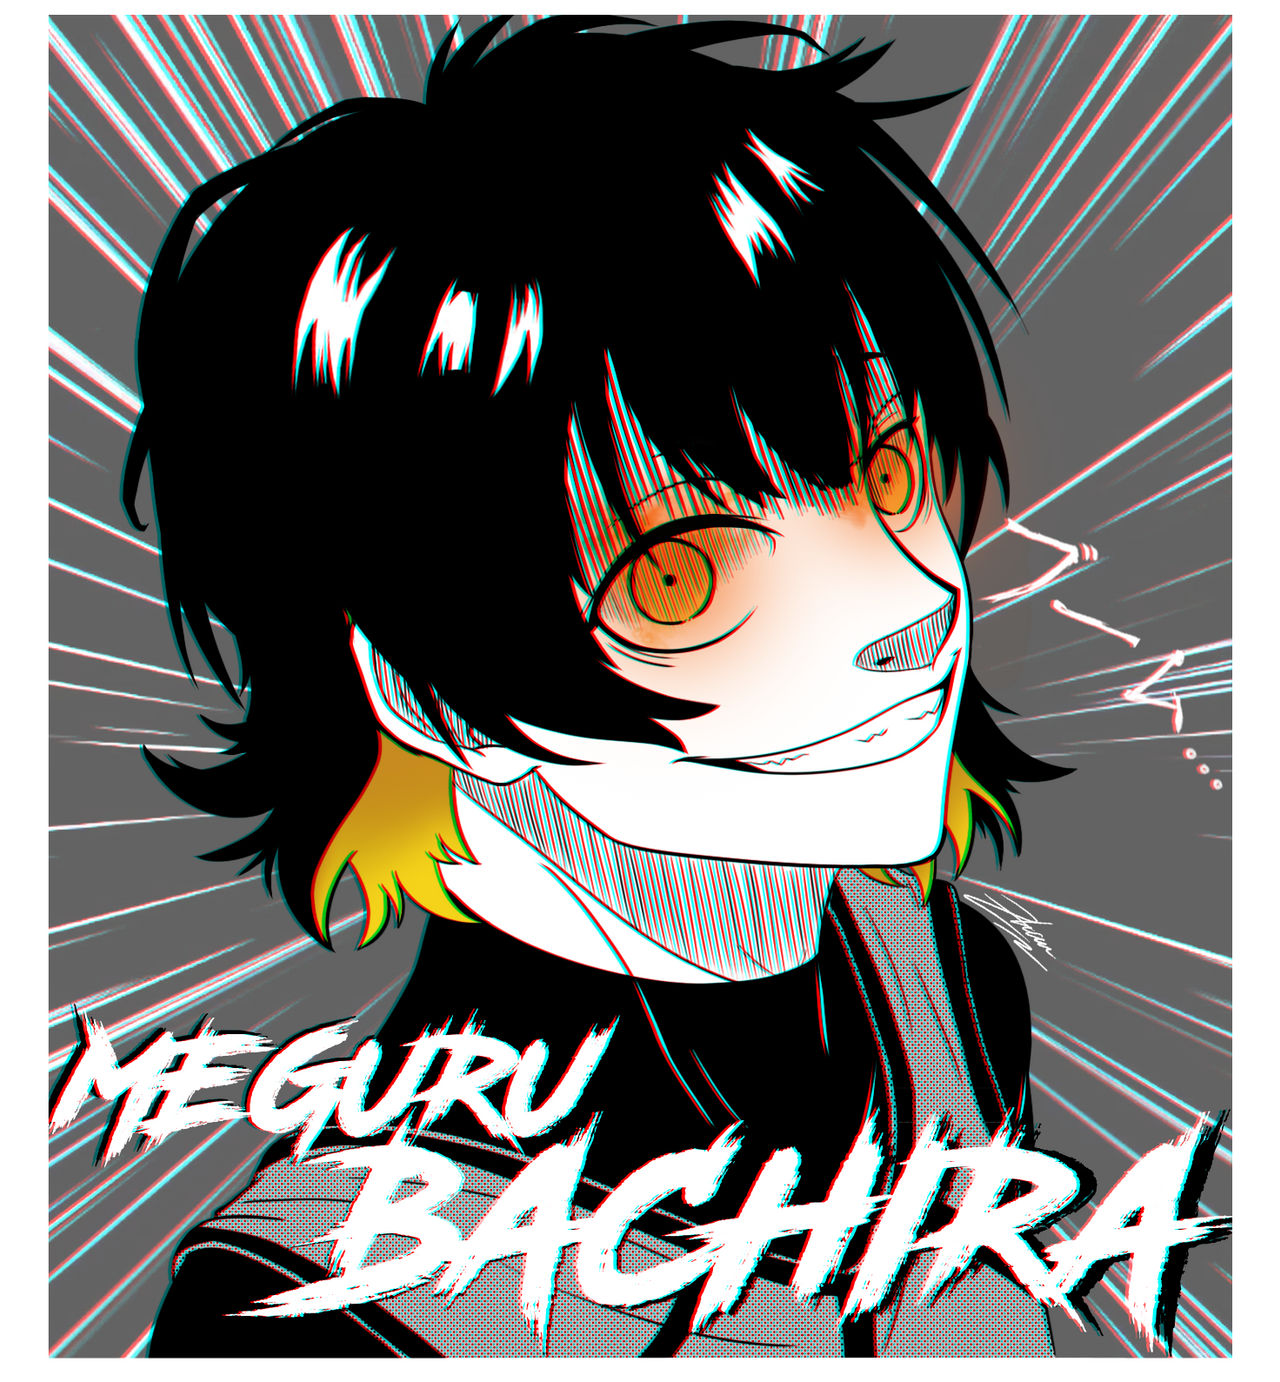 Meguru-bachira by MaggieSoftBoy on DeviantArt